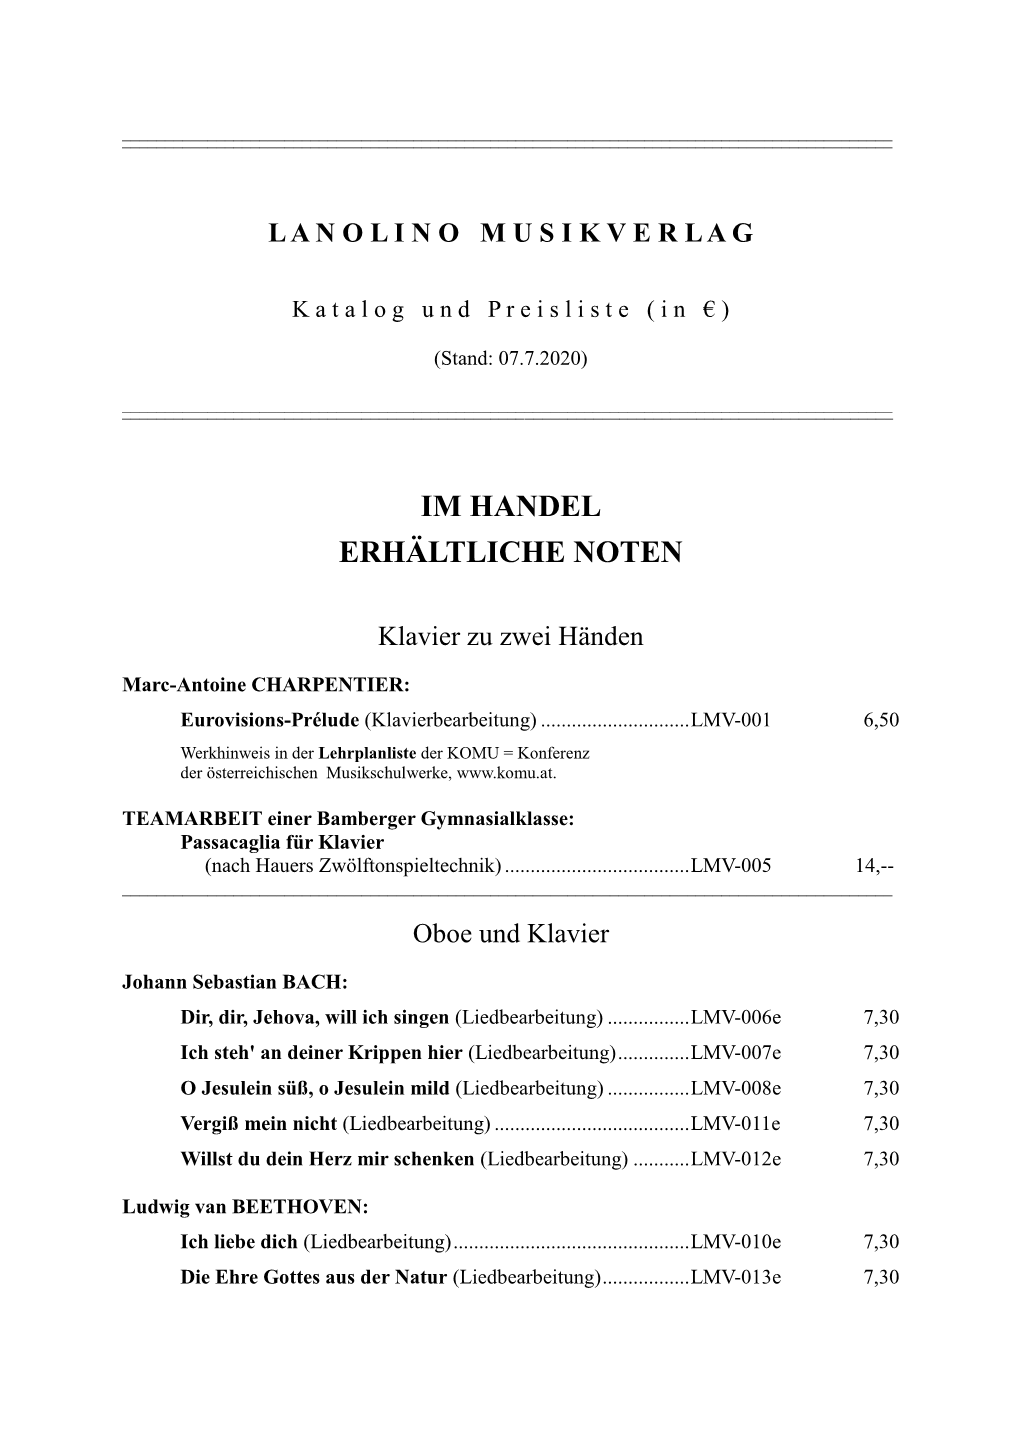 Lanolino Musikverlag